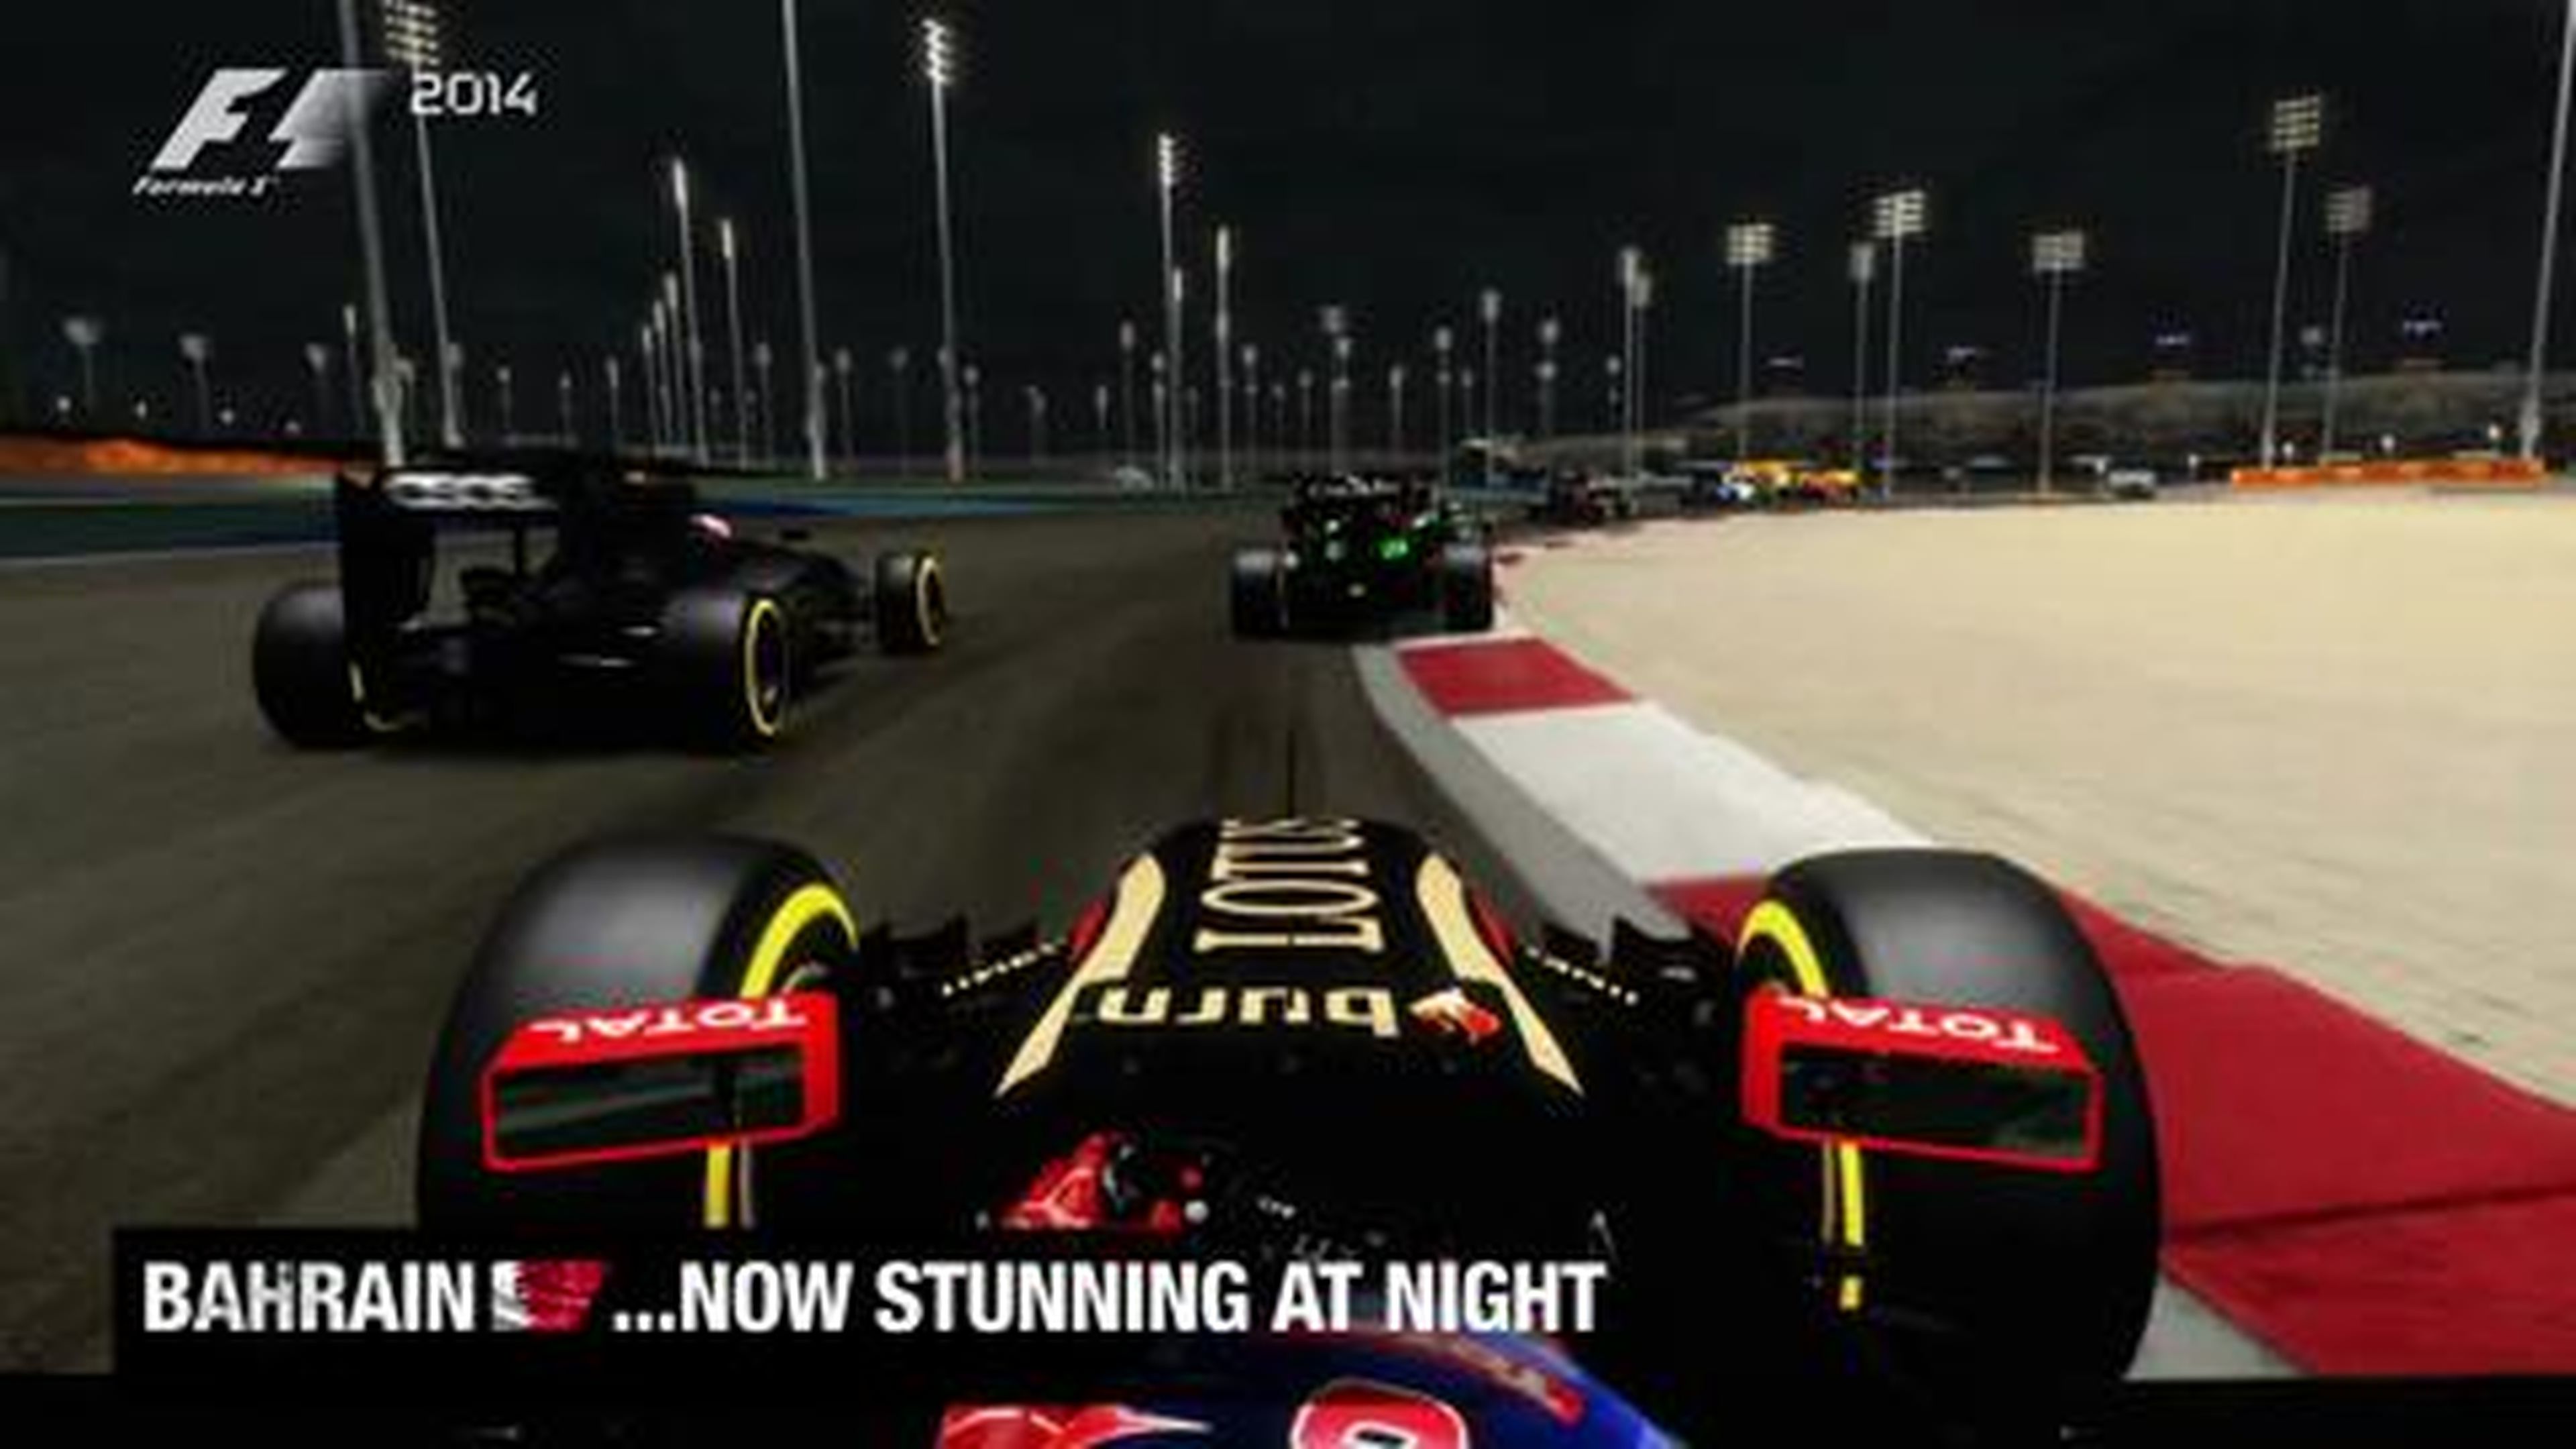 F1 2014 - Who Wins You Decide- The 2014 Season Trailer